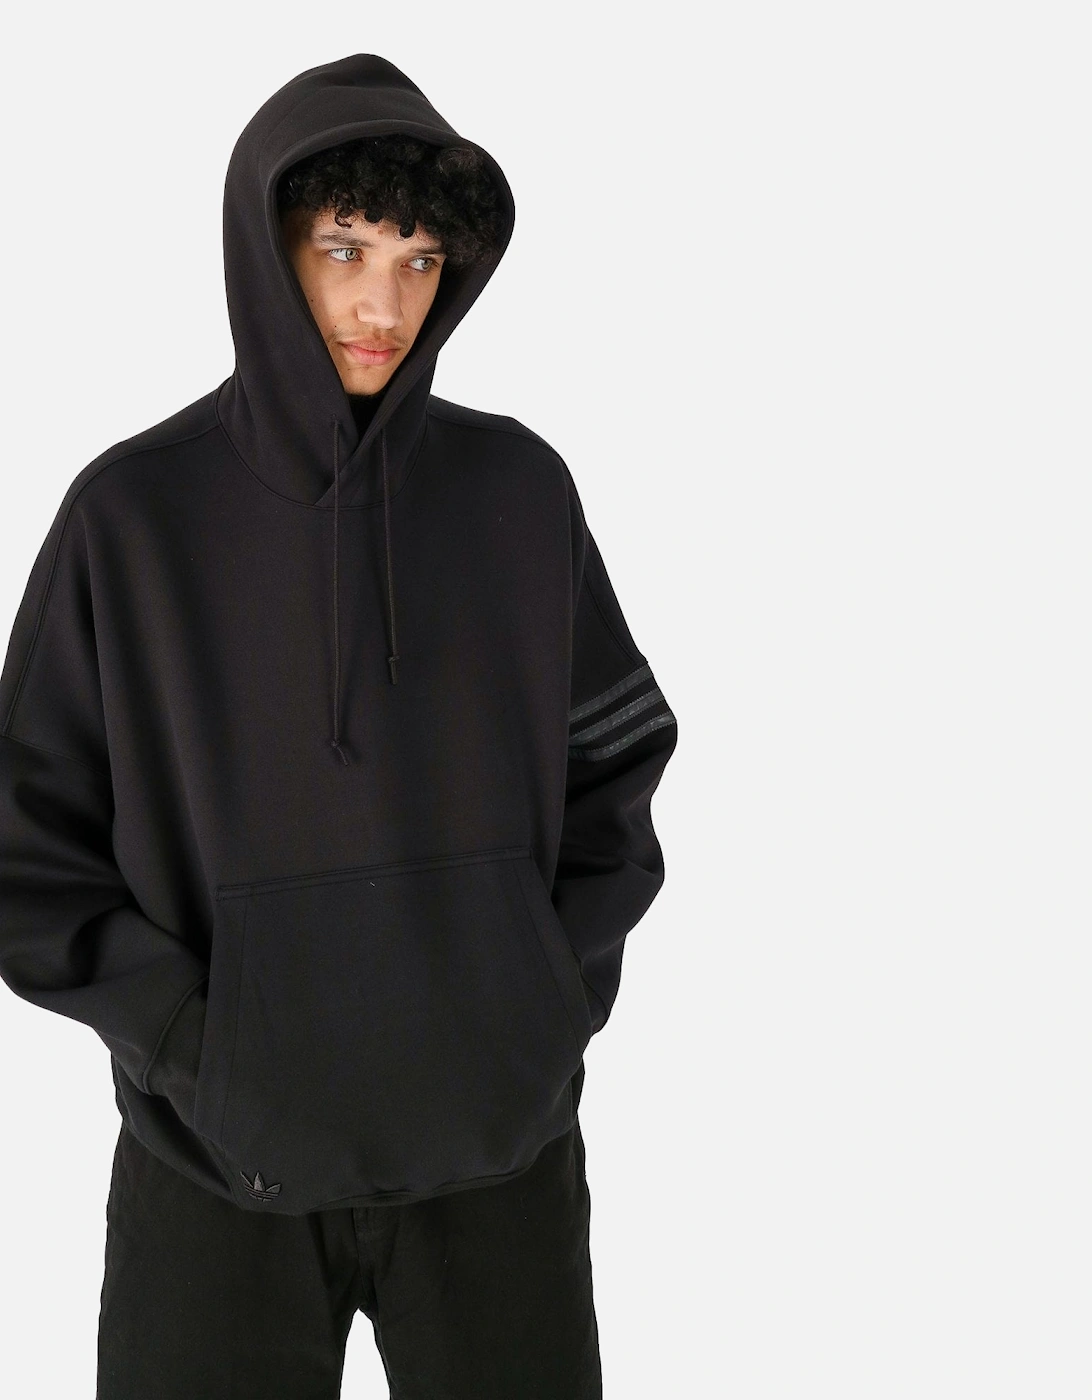 Neuclassic Pullover Hooded Black Sweatshirt